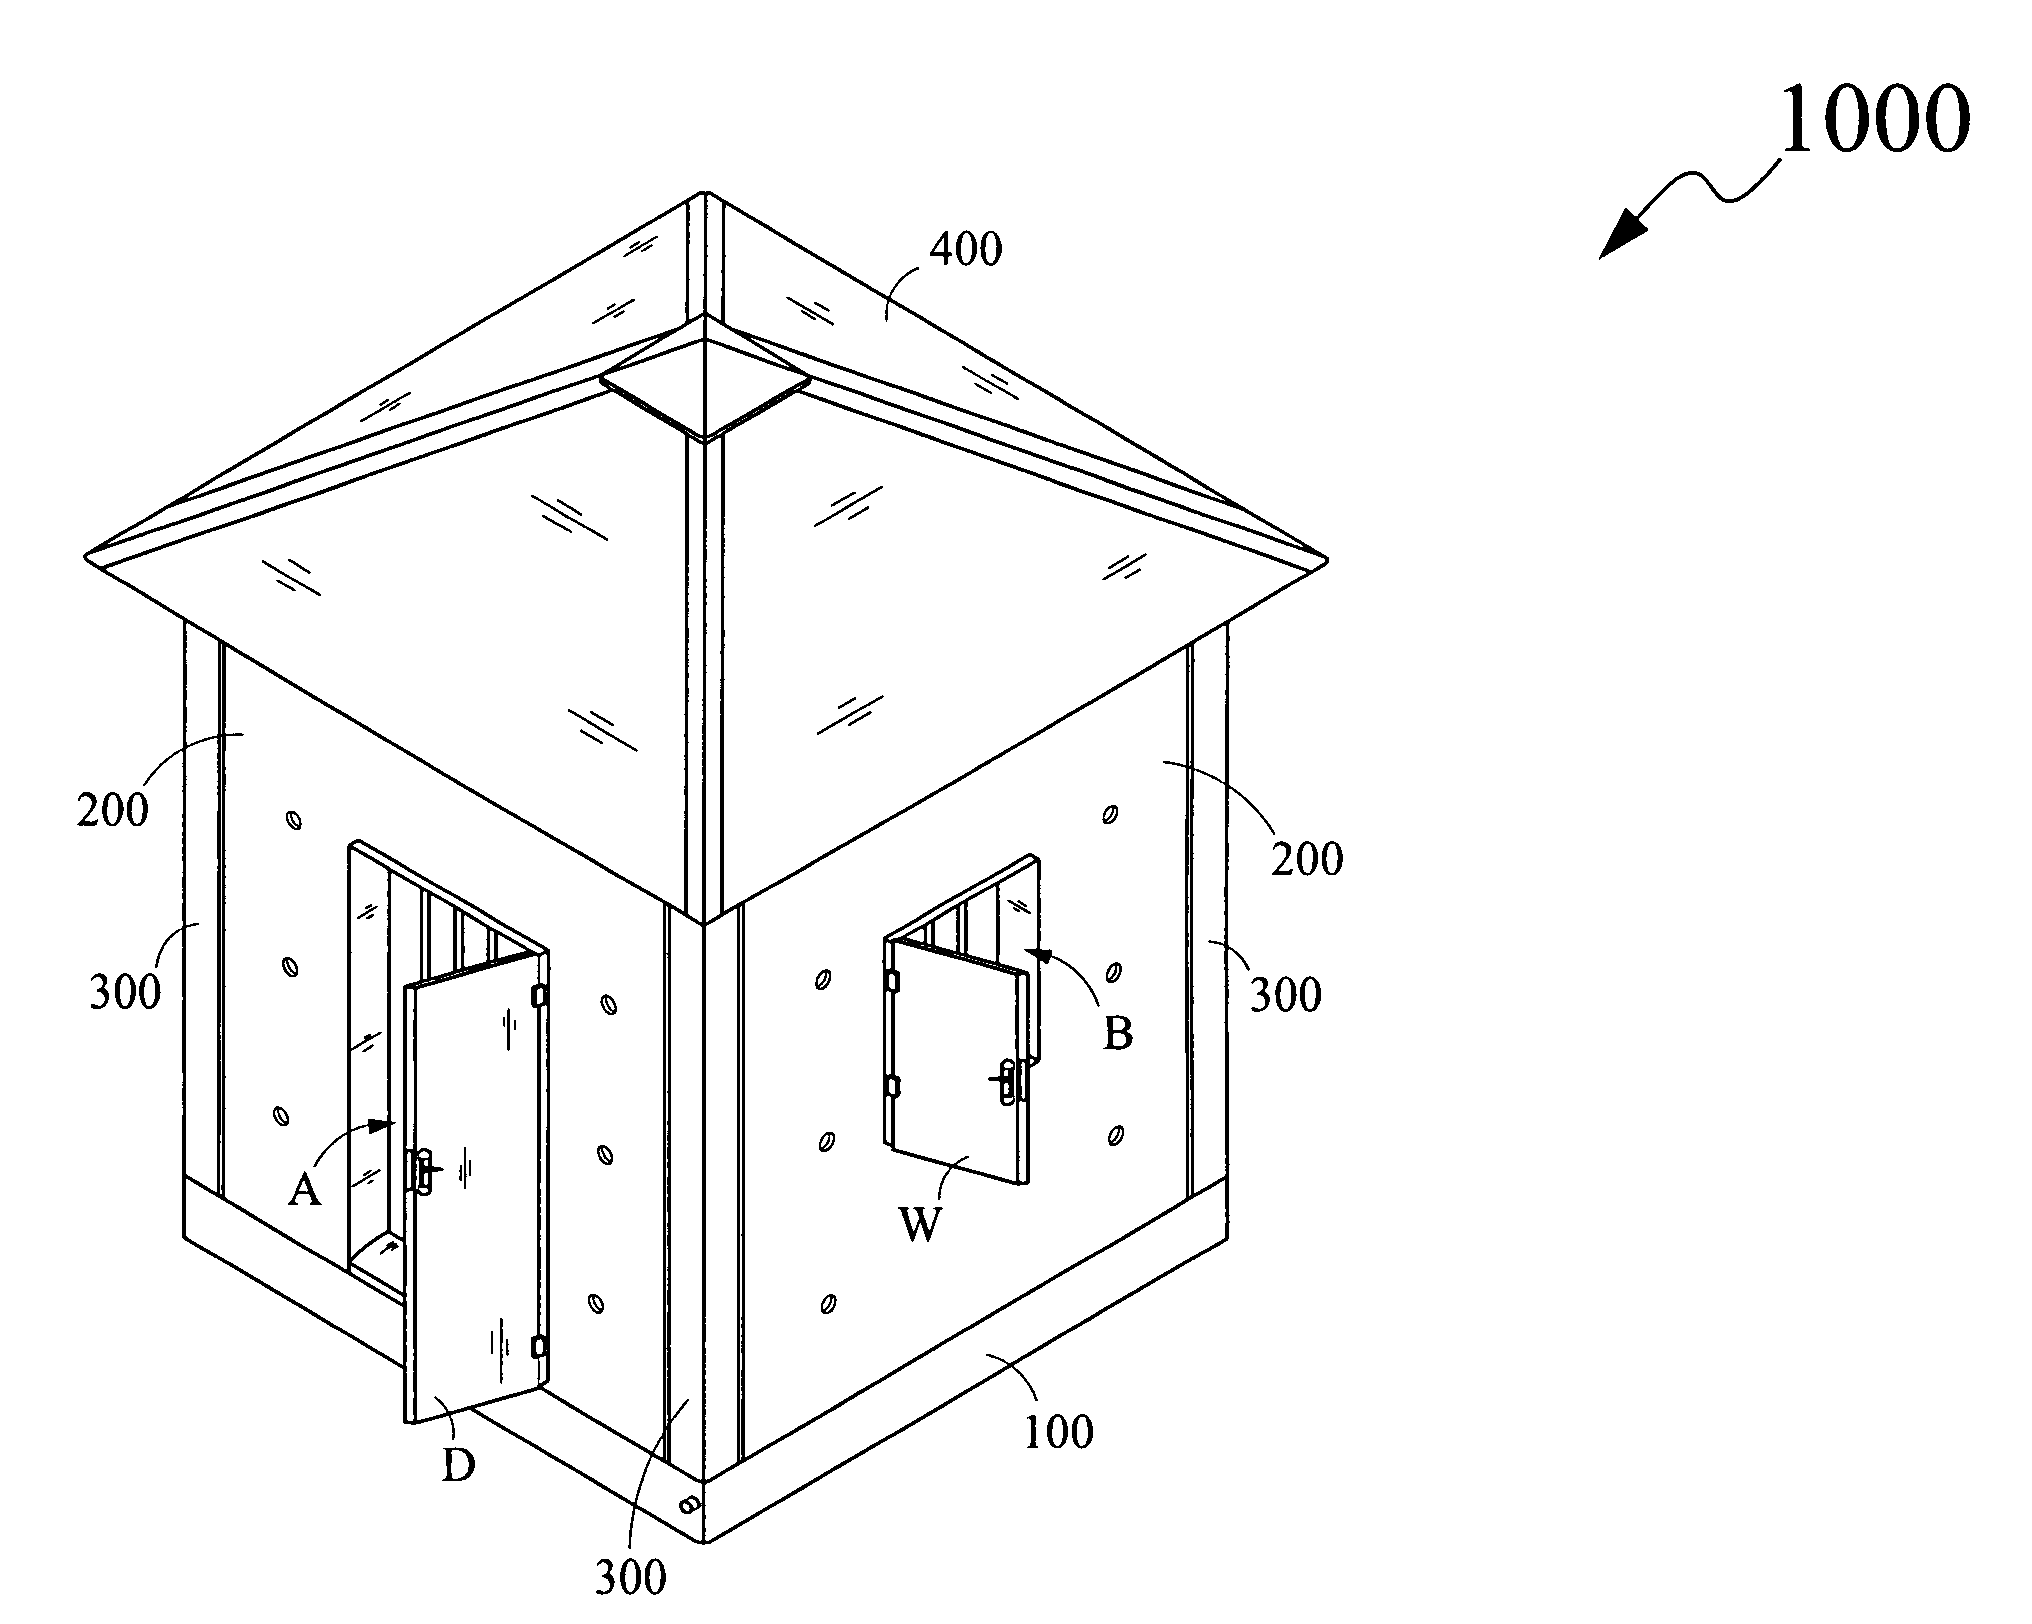 Modular building system